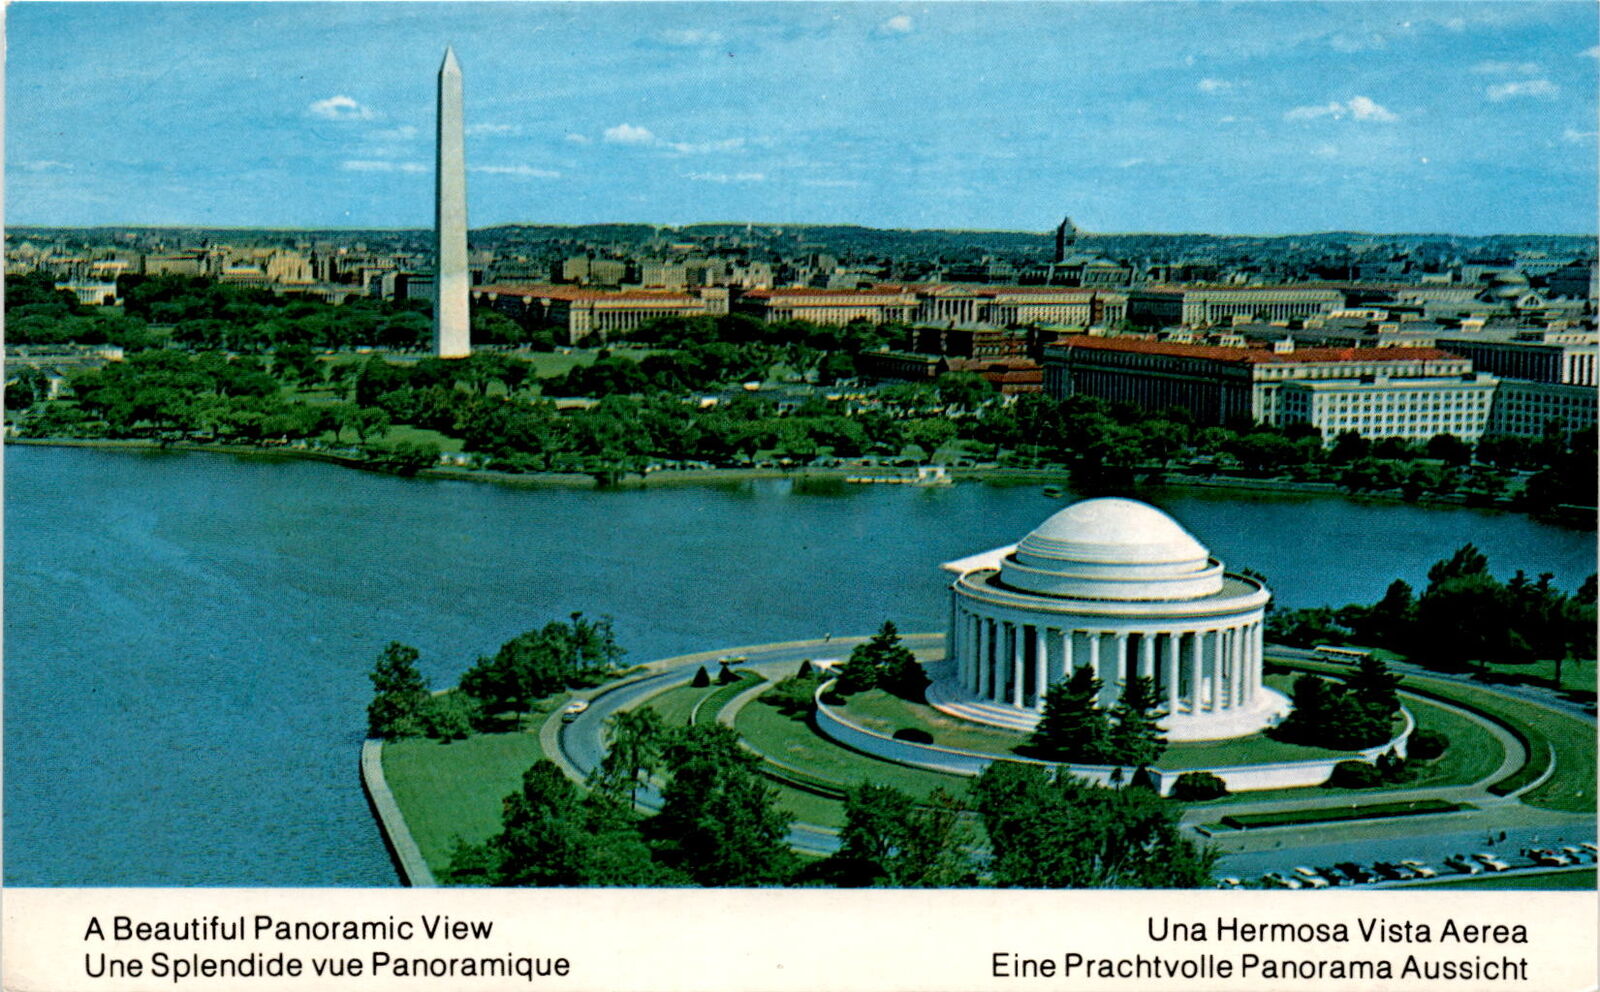 Stunning Panoramic View of Washington, D.C.